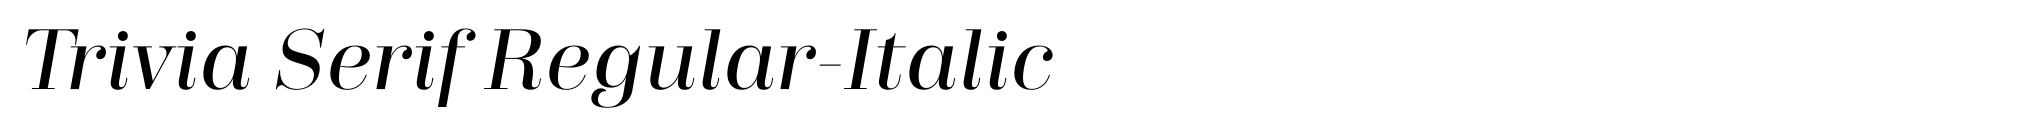 Trivia Serif Regular-Italic image